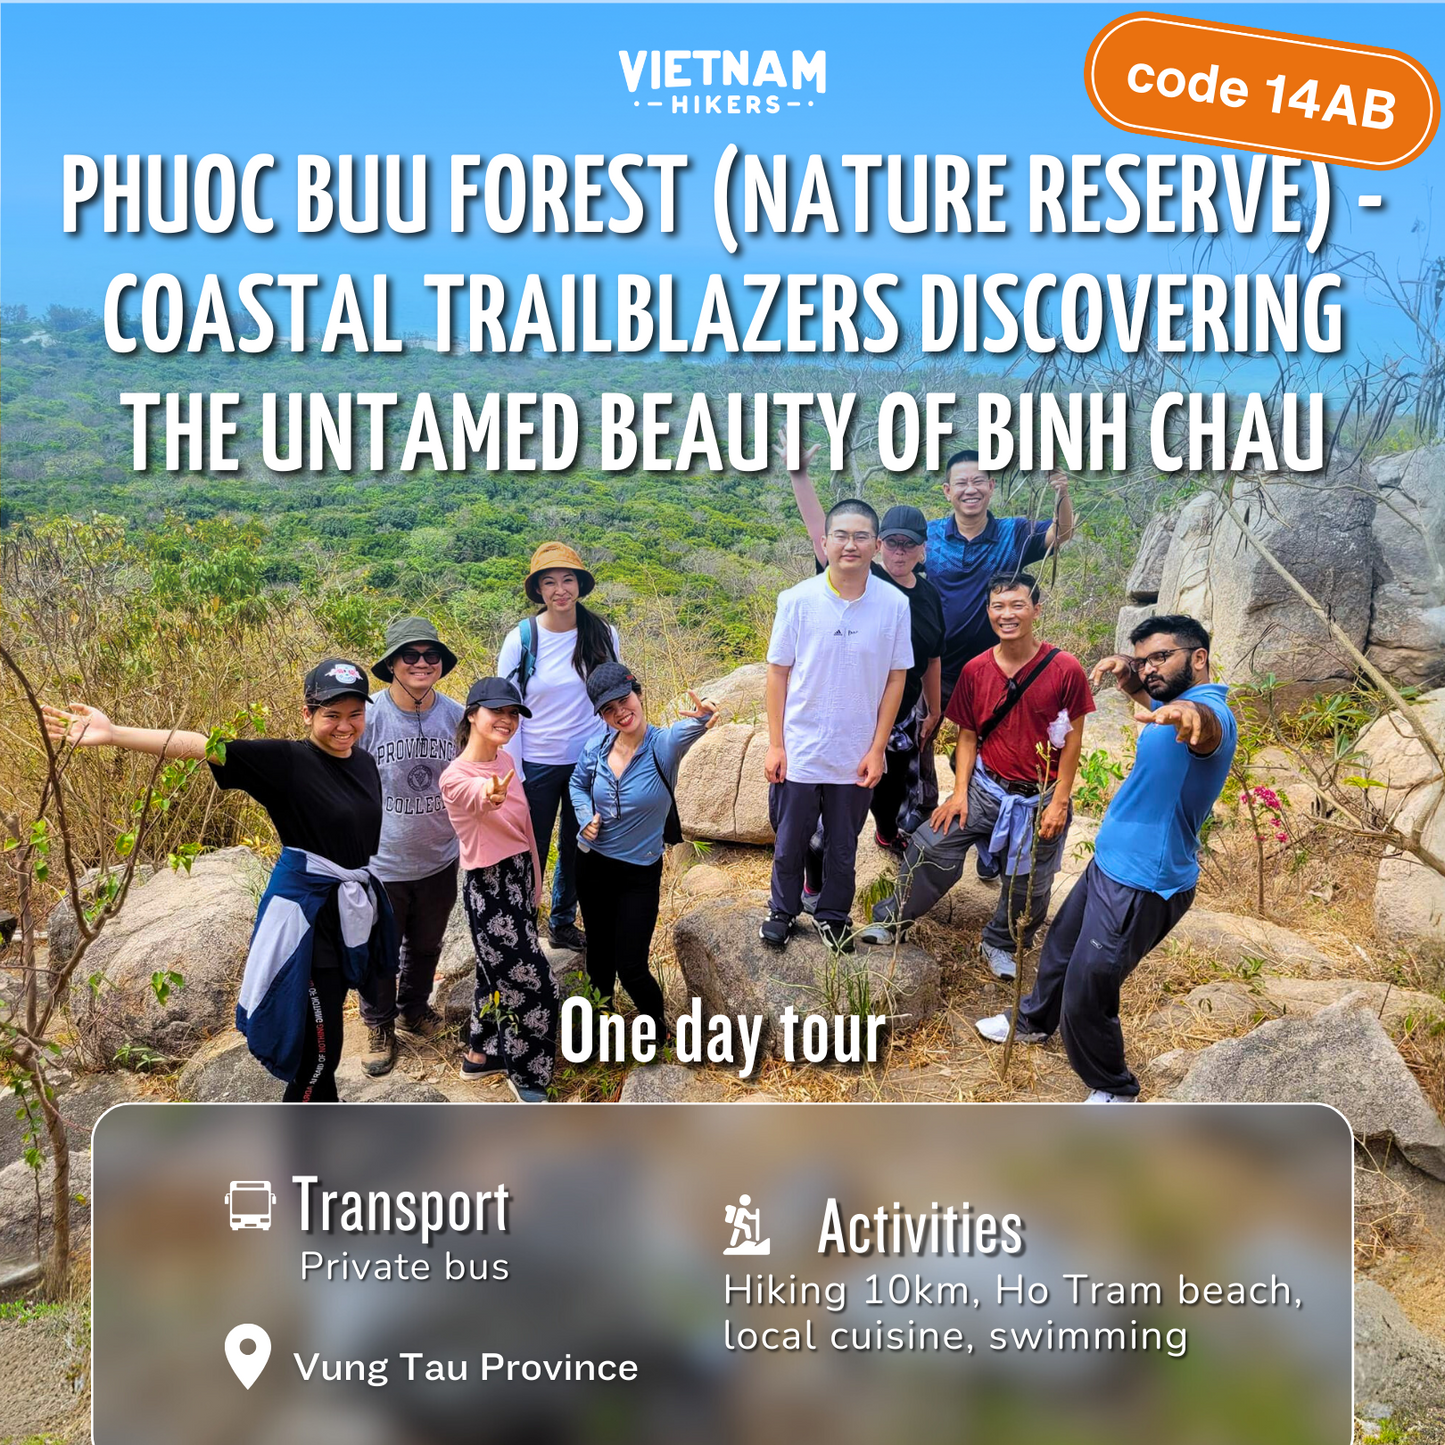 14AB: Phuoc Buu Forest (Nature Reserve): Coastal Trailblazers Discovering The Untamed Beauty Of Binh Chau